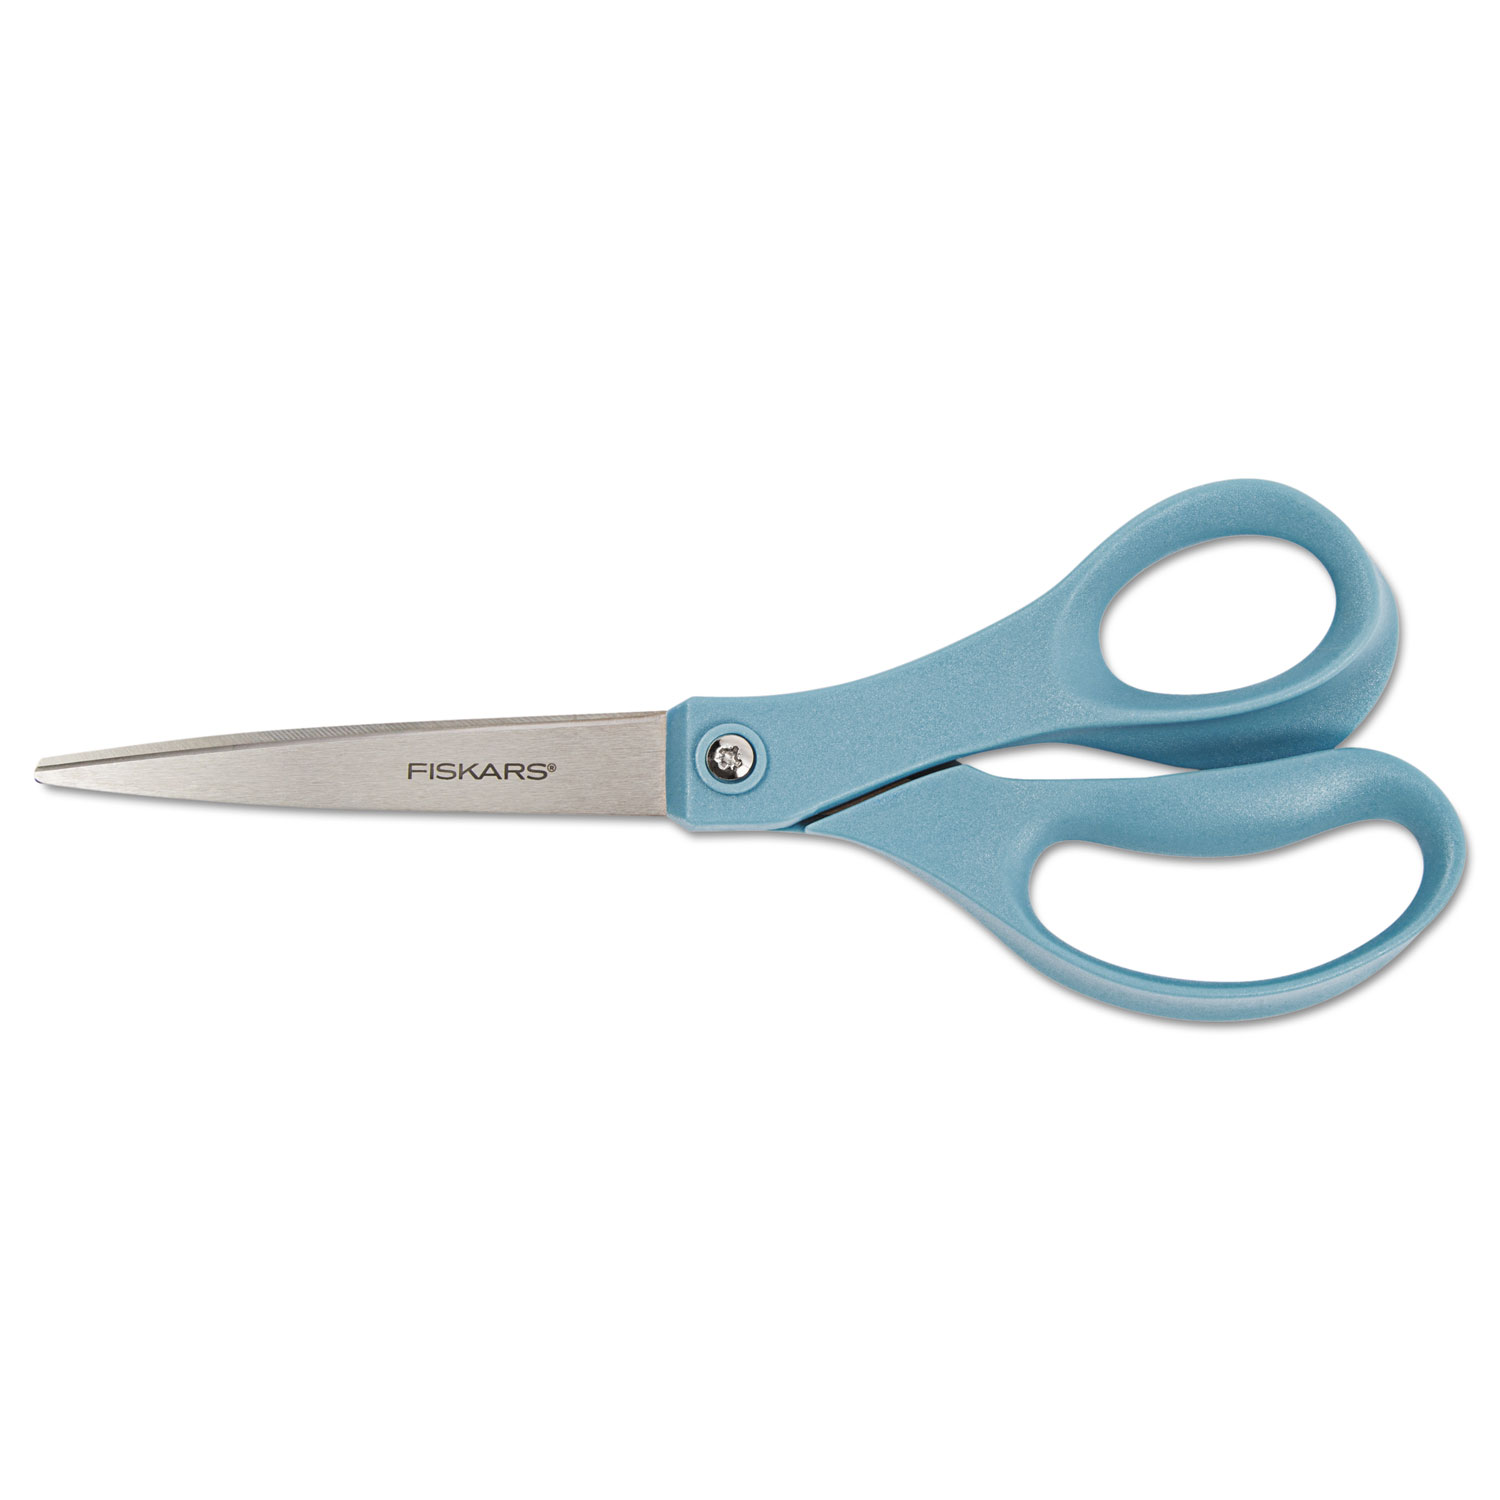  Fiskars 142490-1005 Contoured Performance Scissors, 8 Long, 3.5 Cut Length, Blue Straight Handle (FSK1424901005) 